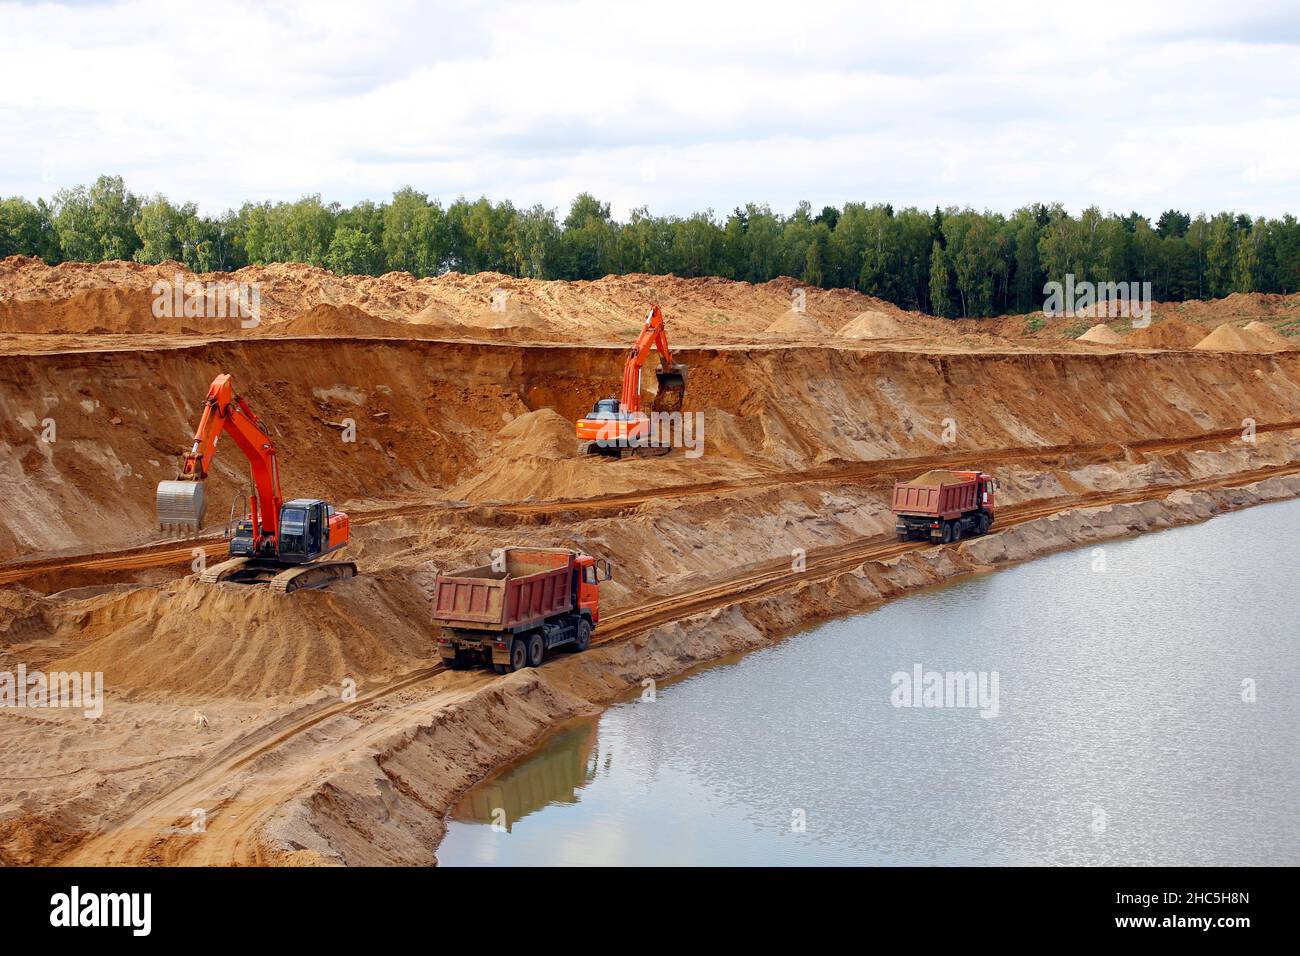 Loading sand into trucks on the sandy career, Mining. Excavators and trucks Stock Photo